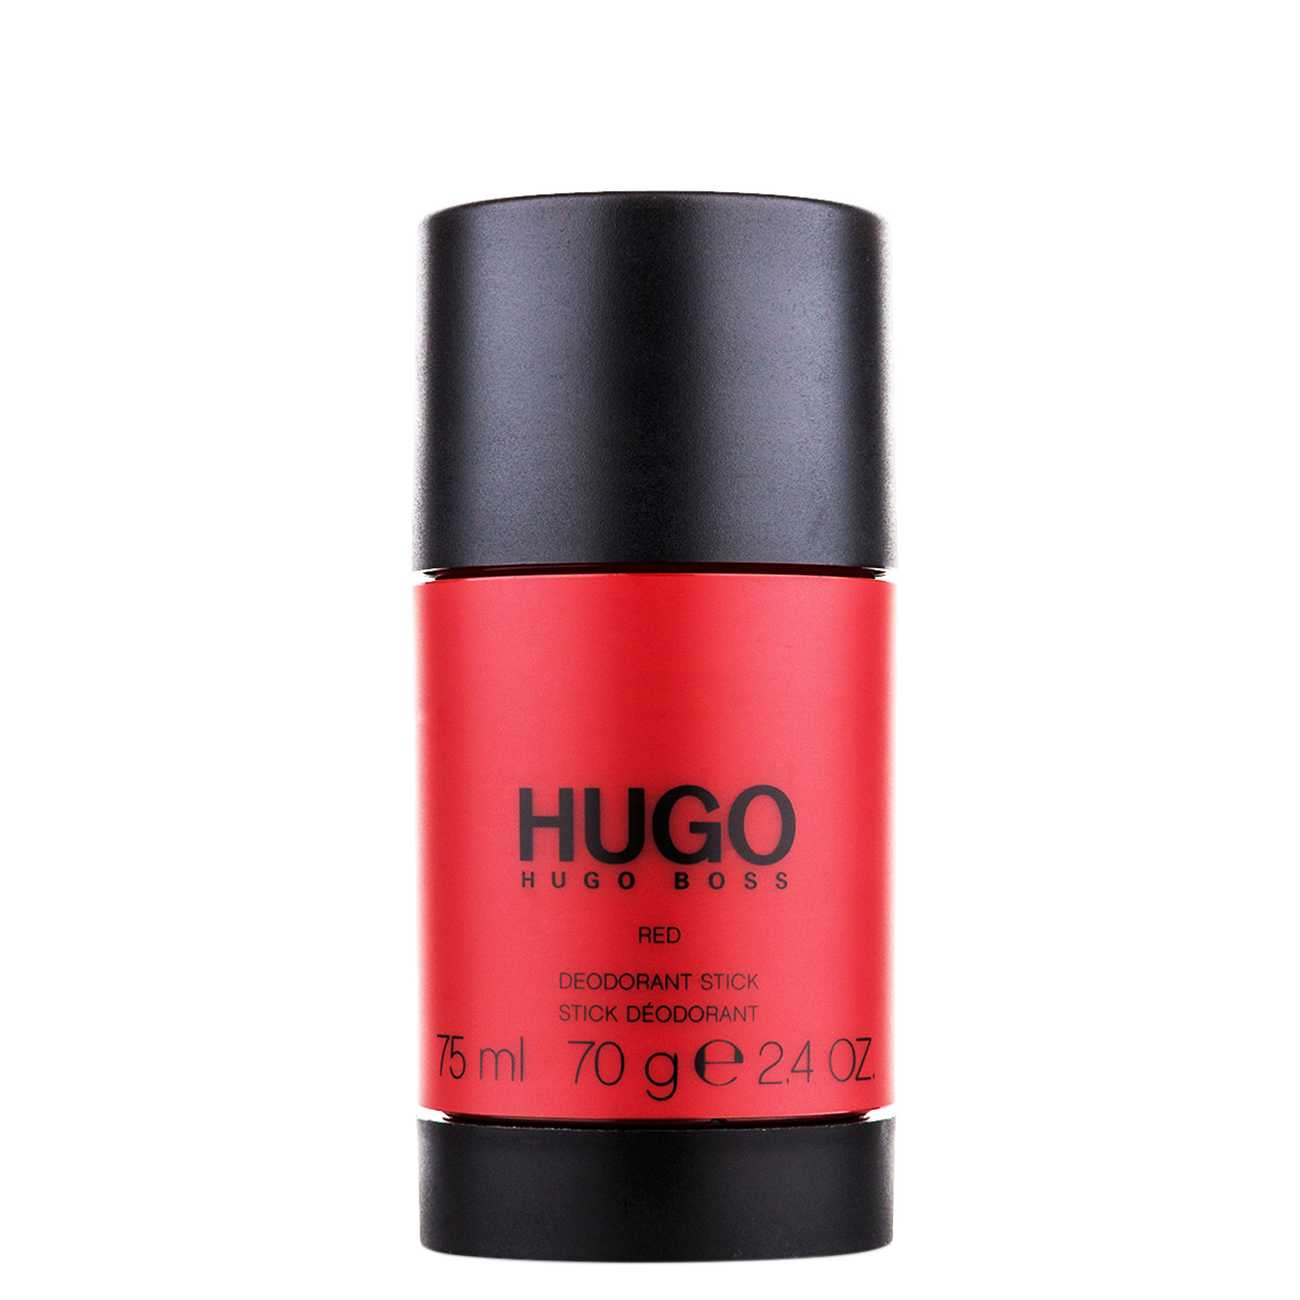 RED DEODORANT STICK Hugo Boss bestvalue.eu